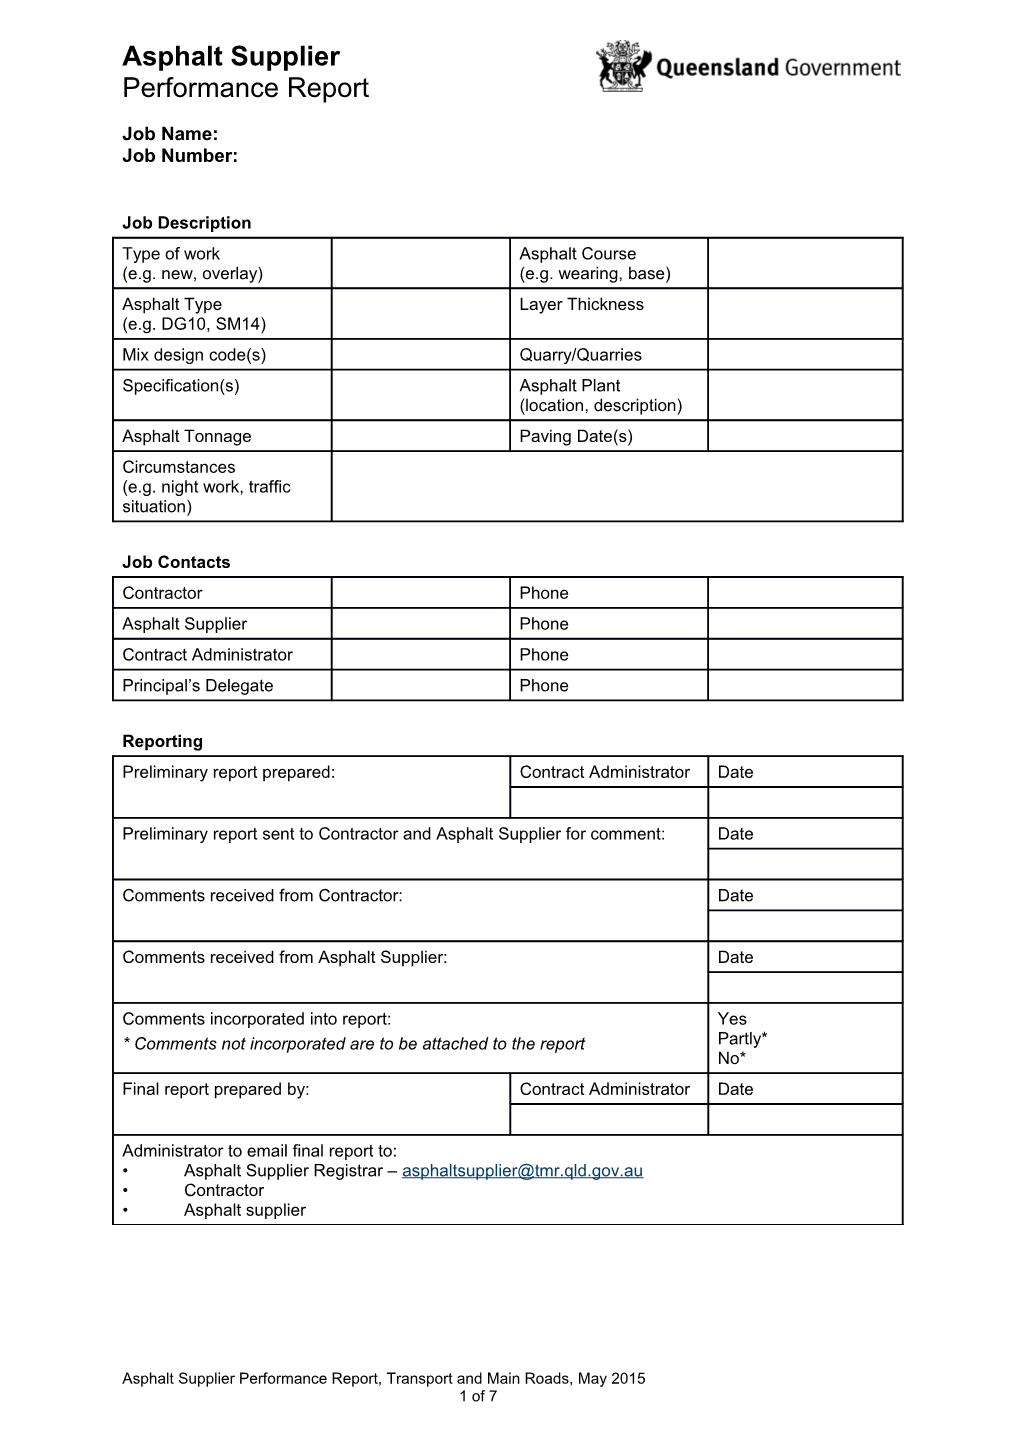 Asphalt Supplier Performance Assessment Report Form